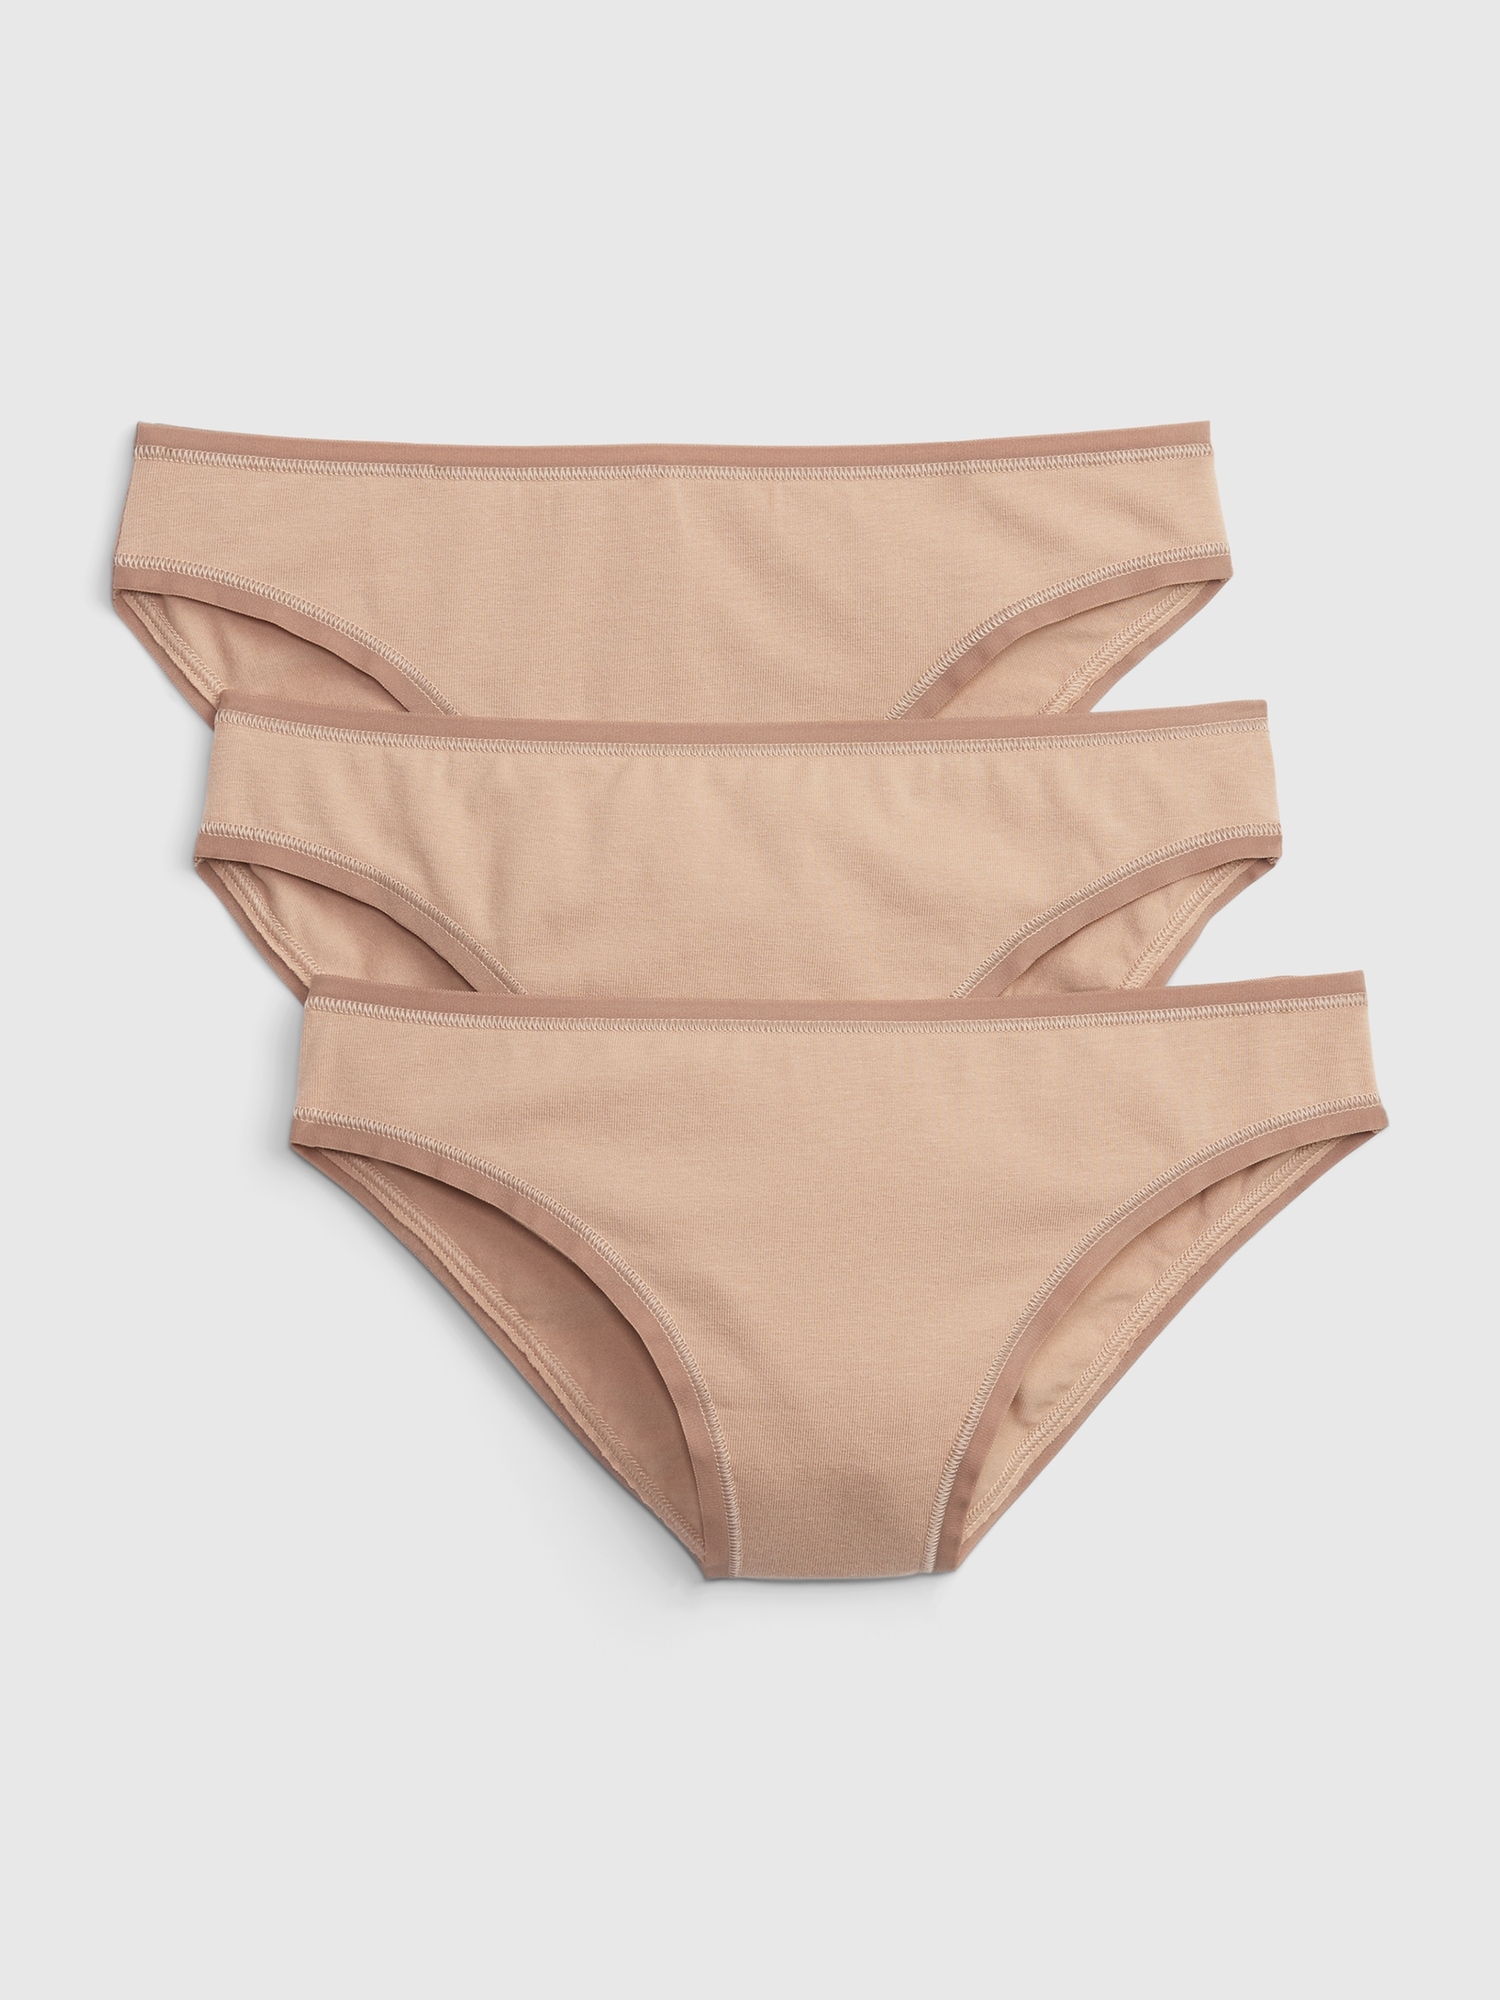 Gap Body Women's Organic Stretch Cotton Bikini Underwear Size Small NWT